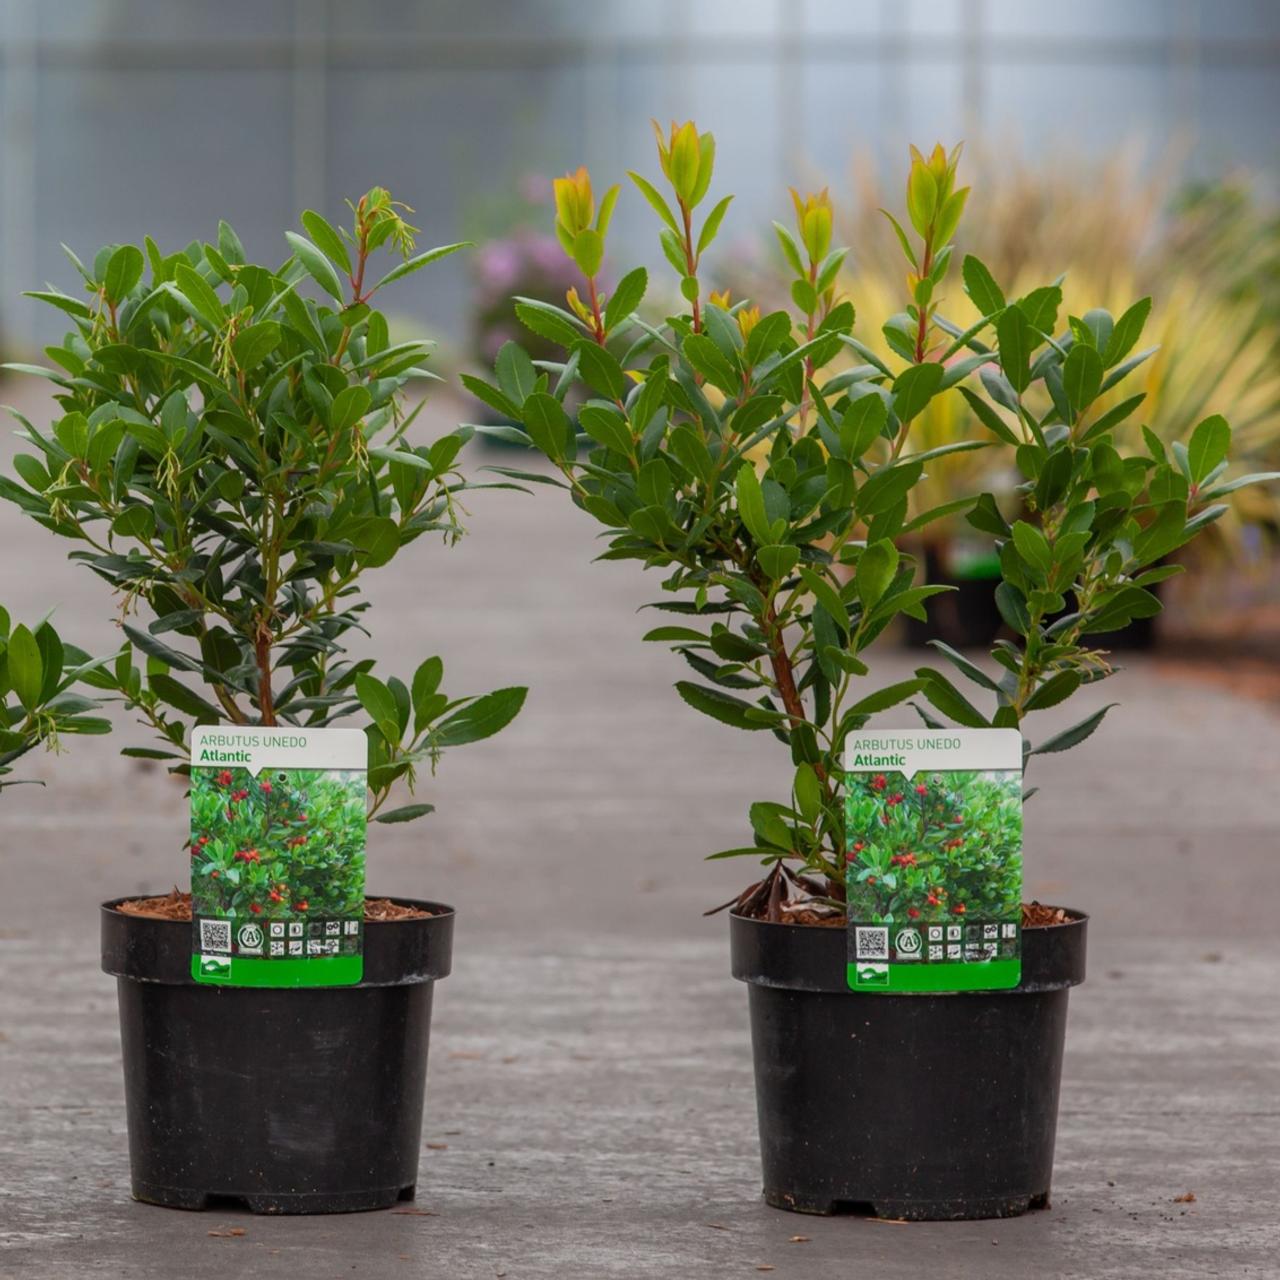 arbutus unedo 'atlantic' - kaufen sie pflanzen bei coolplants